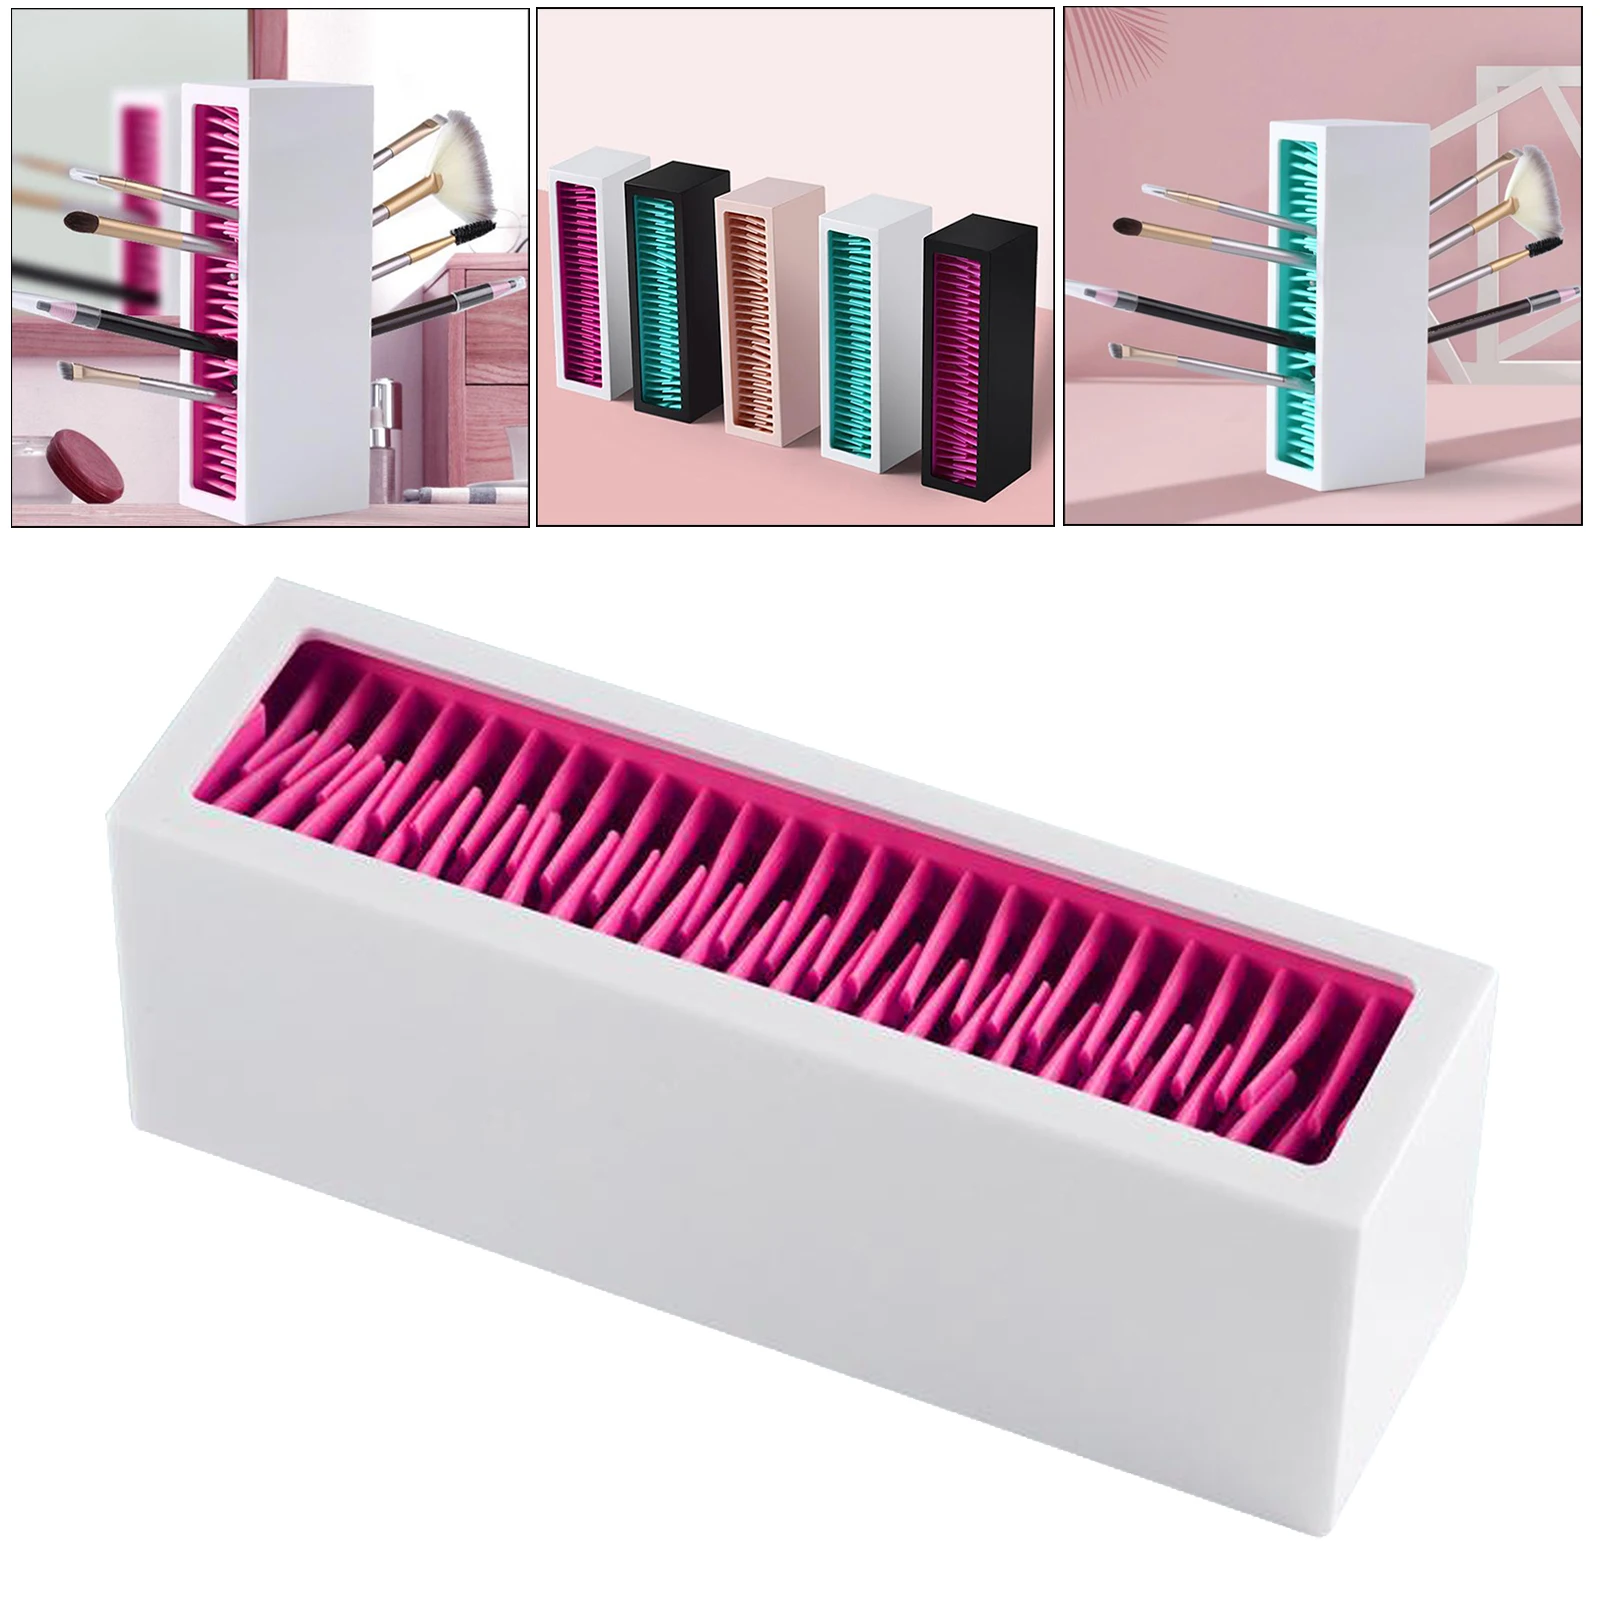 Makeup Brush Storage Holder Organizer Silicone Air Drying Rack Countertop, Women Gift